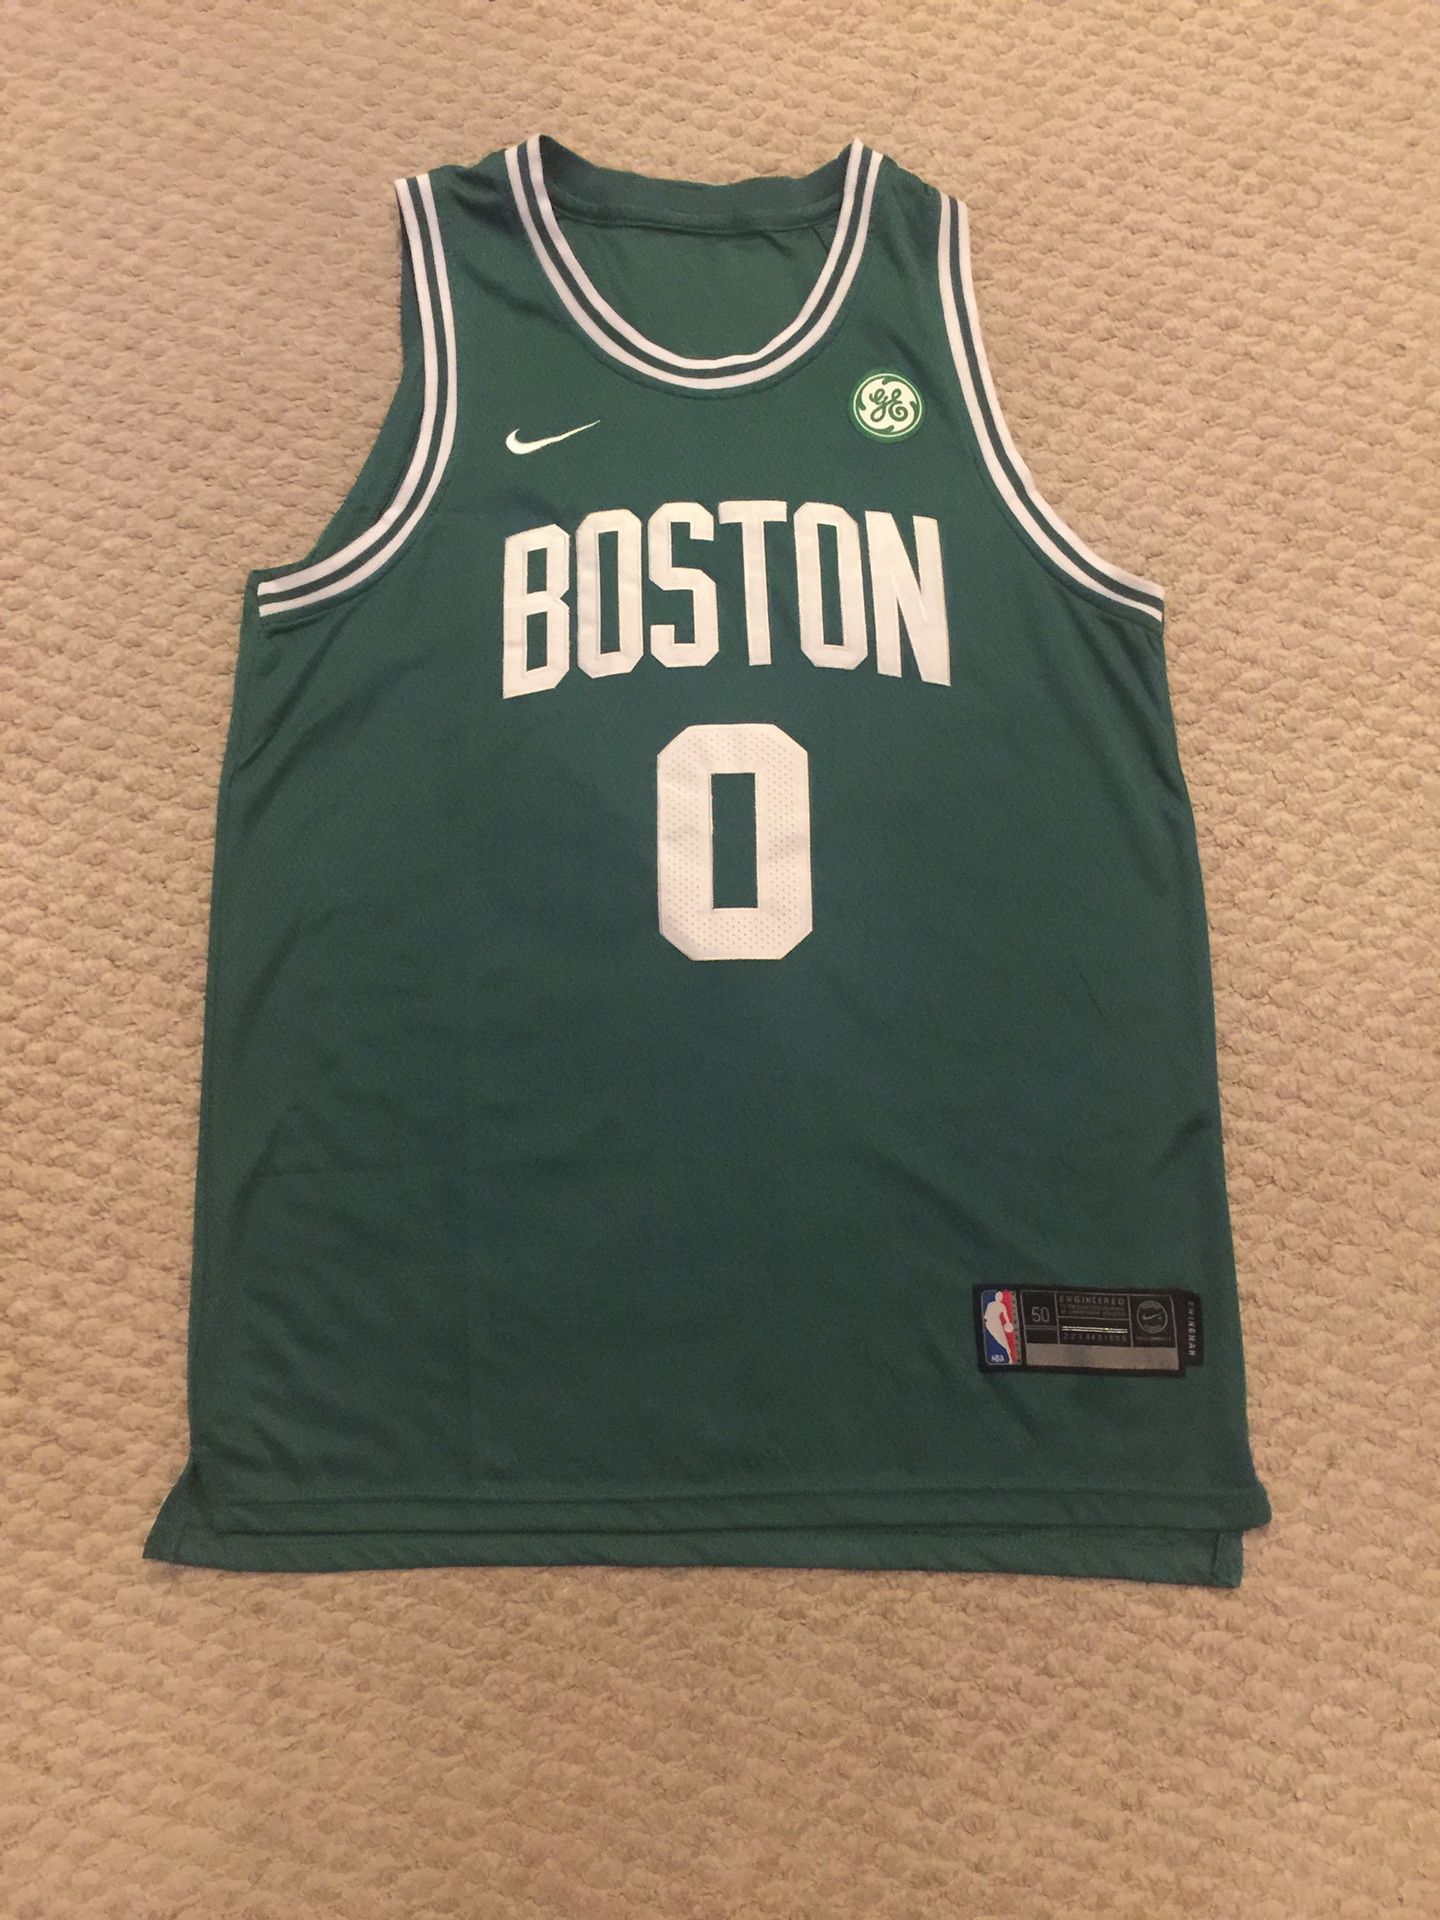 Celtics - Jayson Tatum Jersey